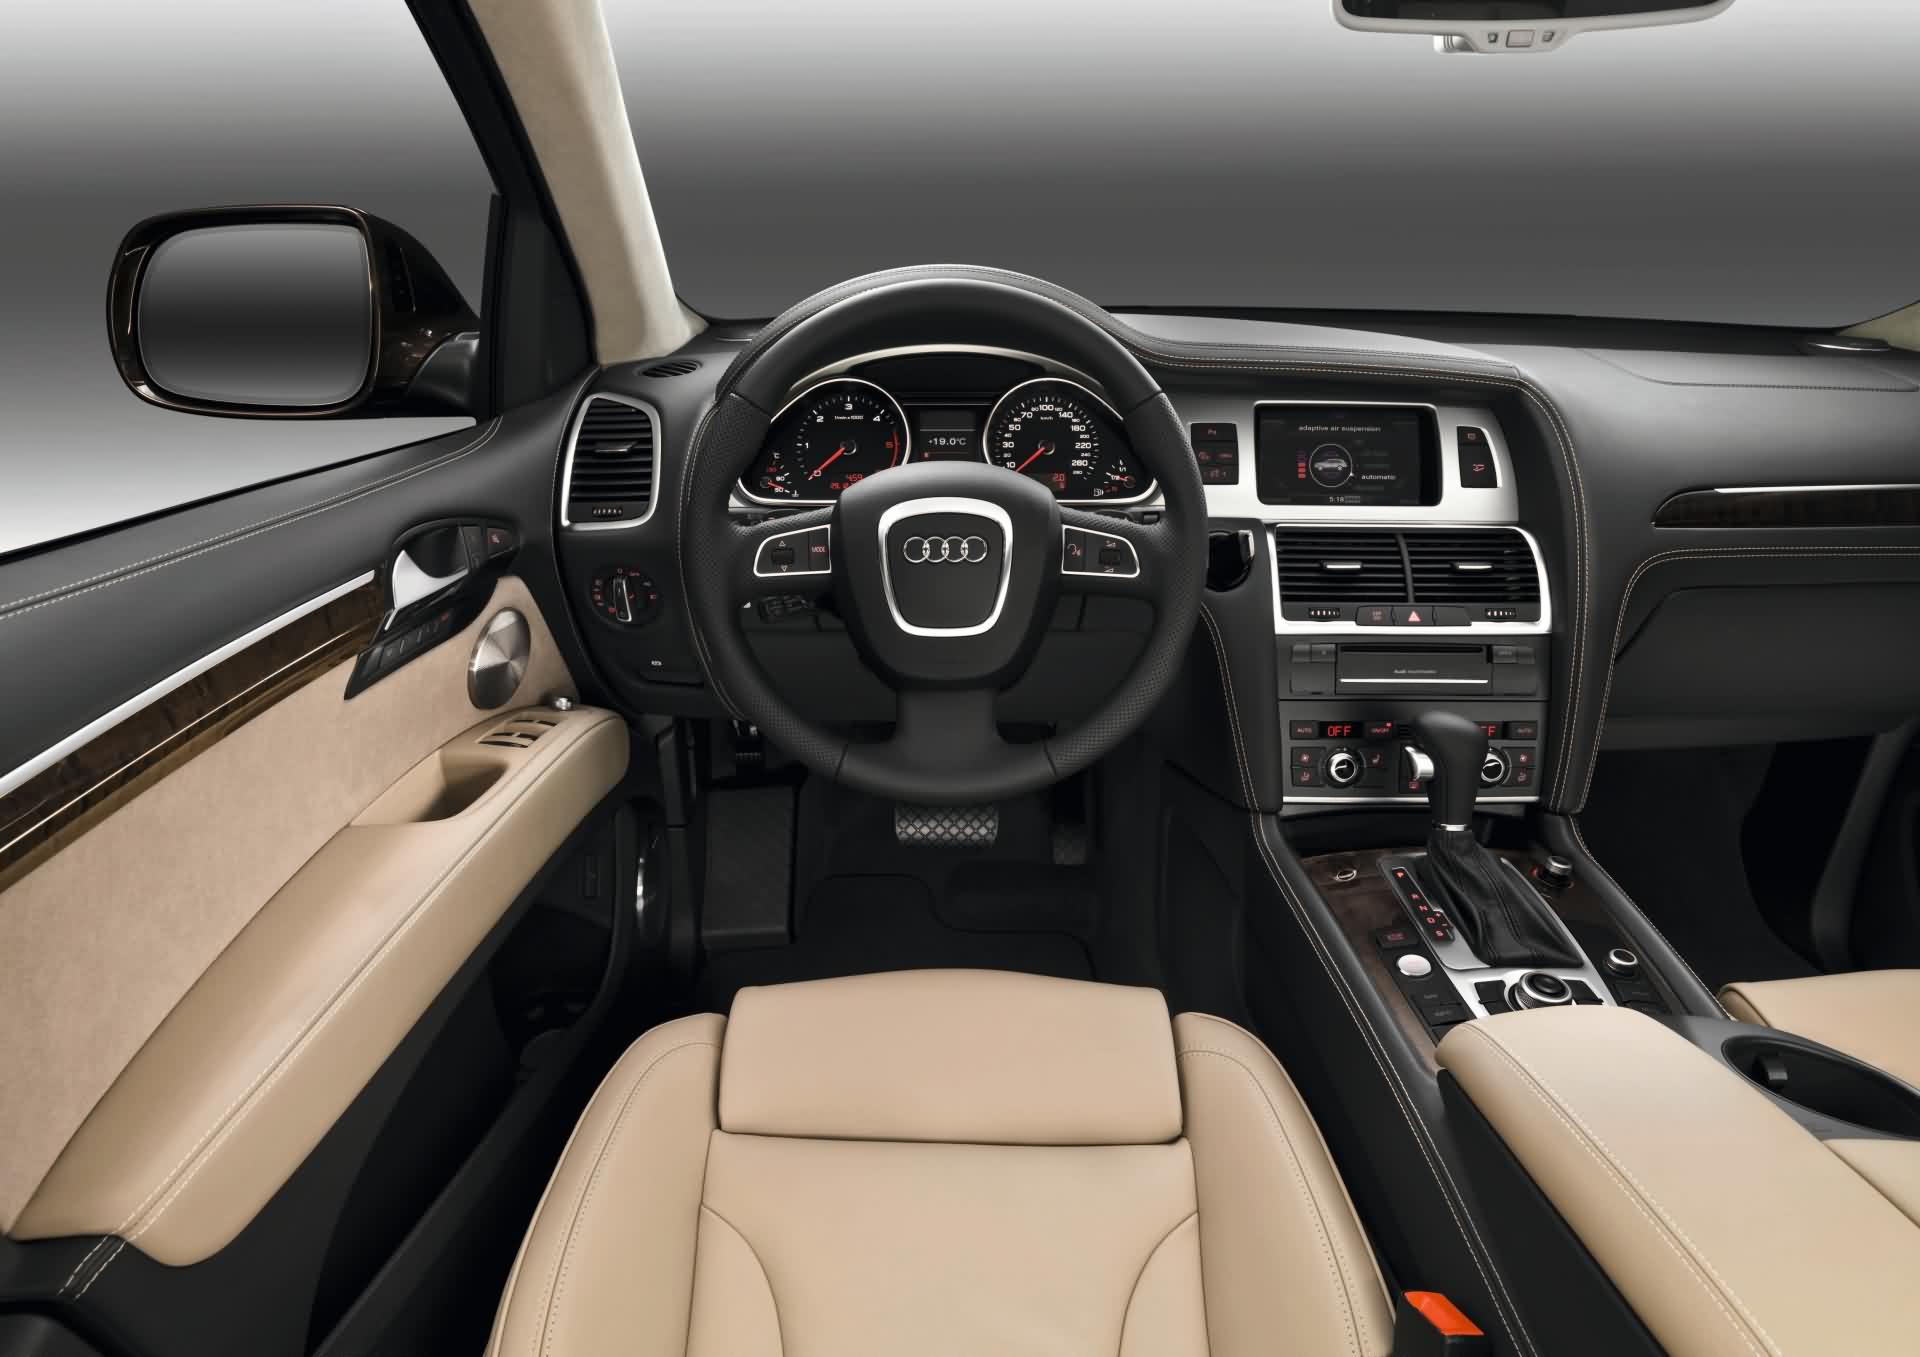 2005 – 2015 Bj. Audi Q7 4L – 1. Generation